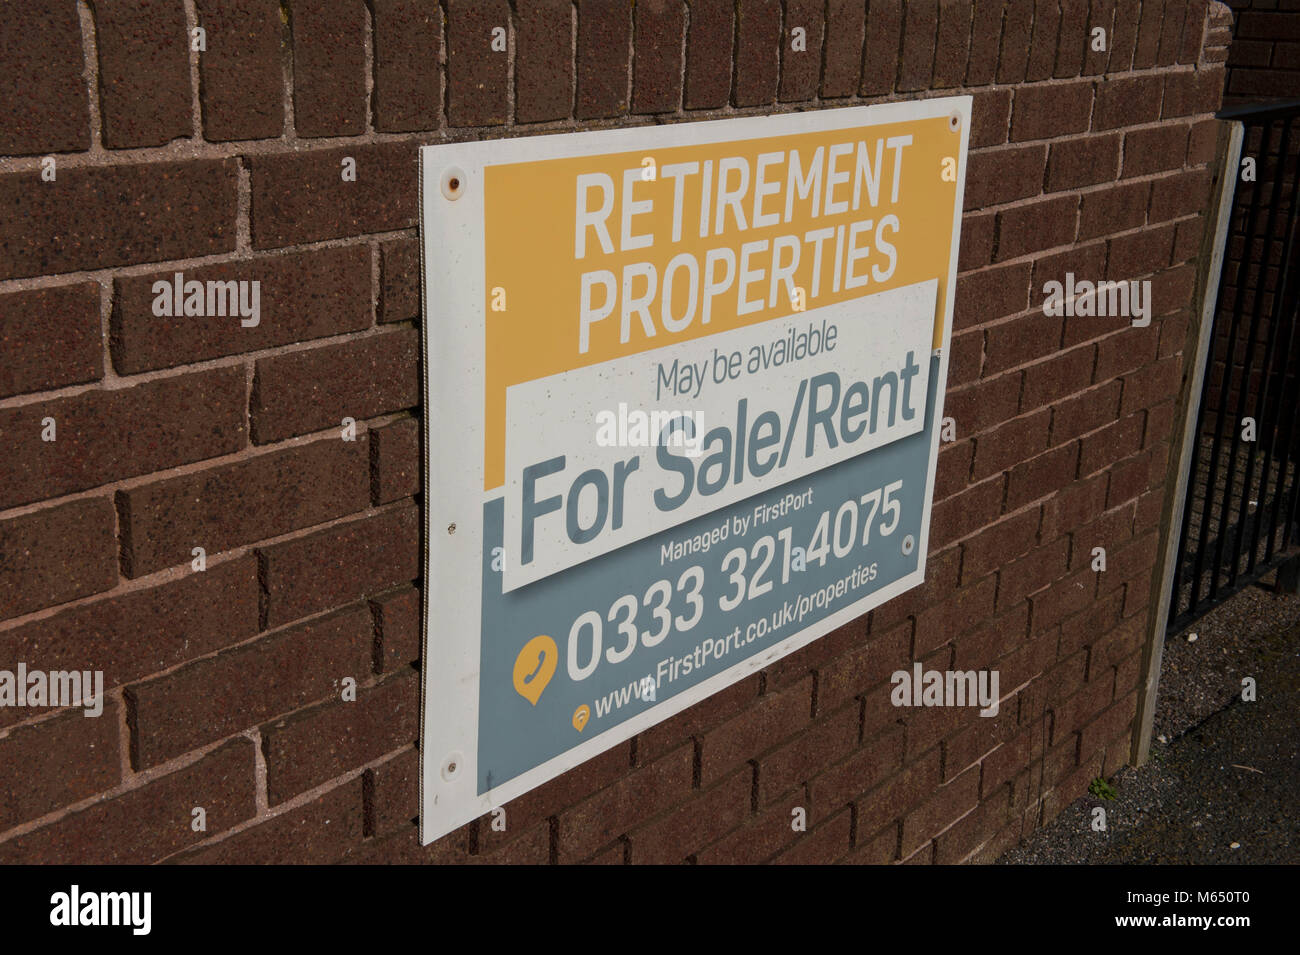 Firstport estate agent sign advertising retirement properties in Seaton, Devon Stock Photo